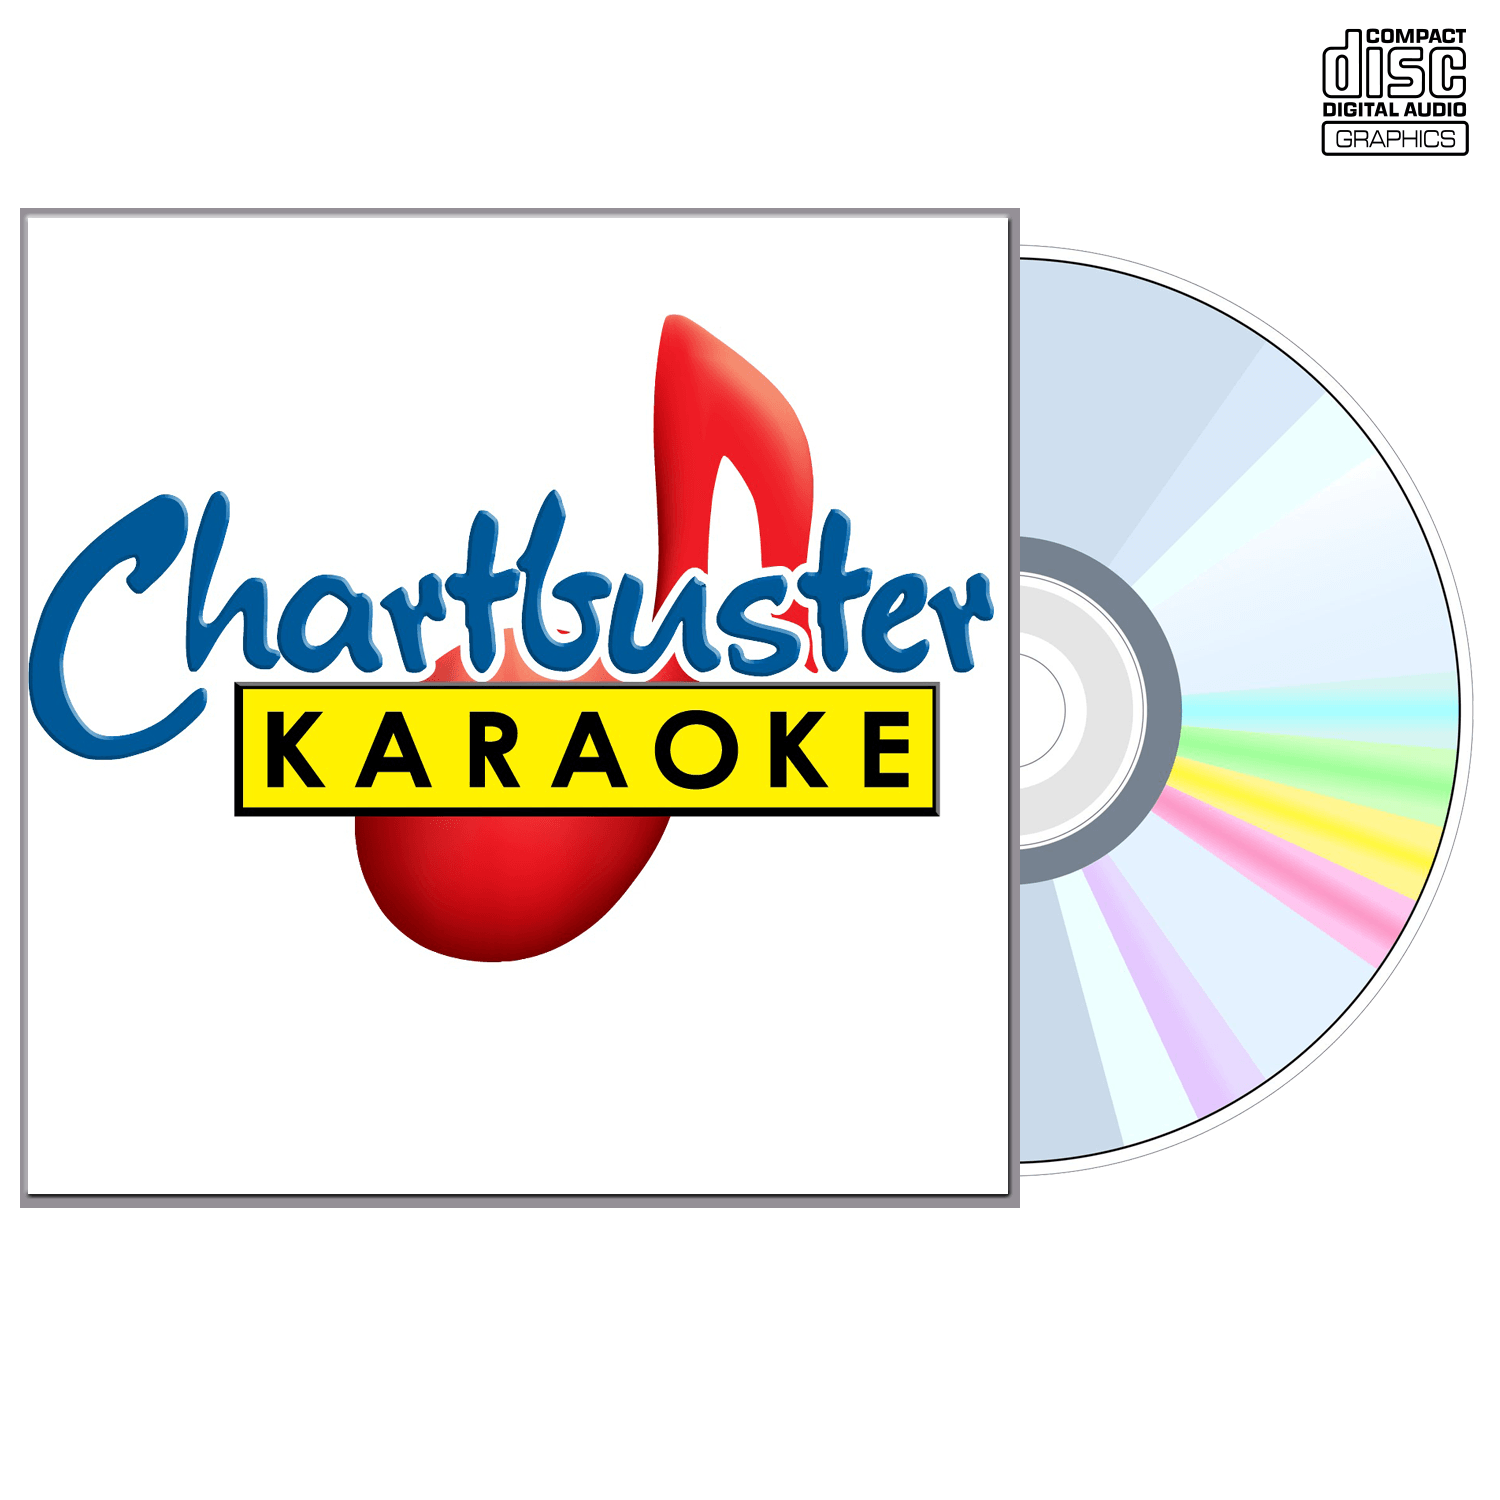 Michelle Branch - CD+G - Chartbuster Karaoke - Karaoke Home Entertainment